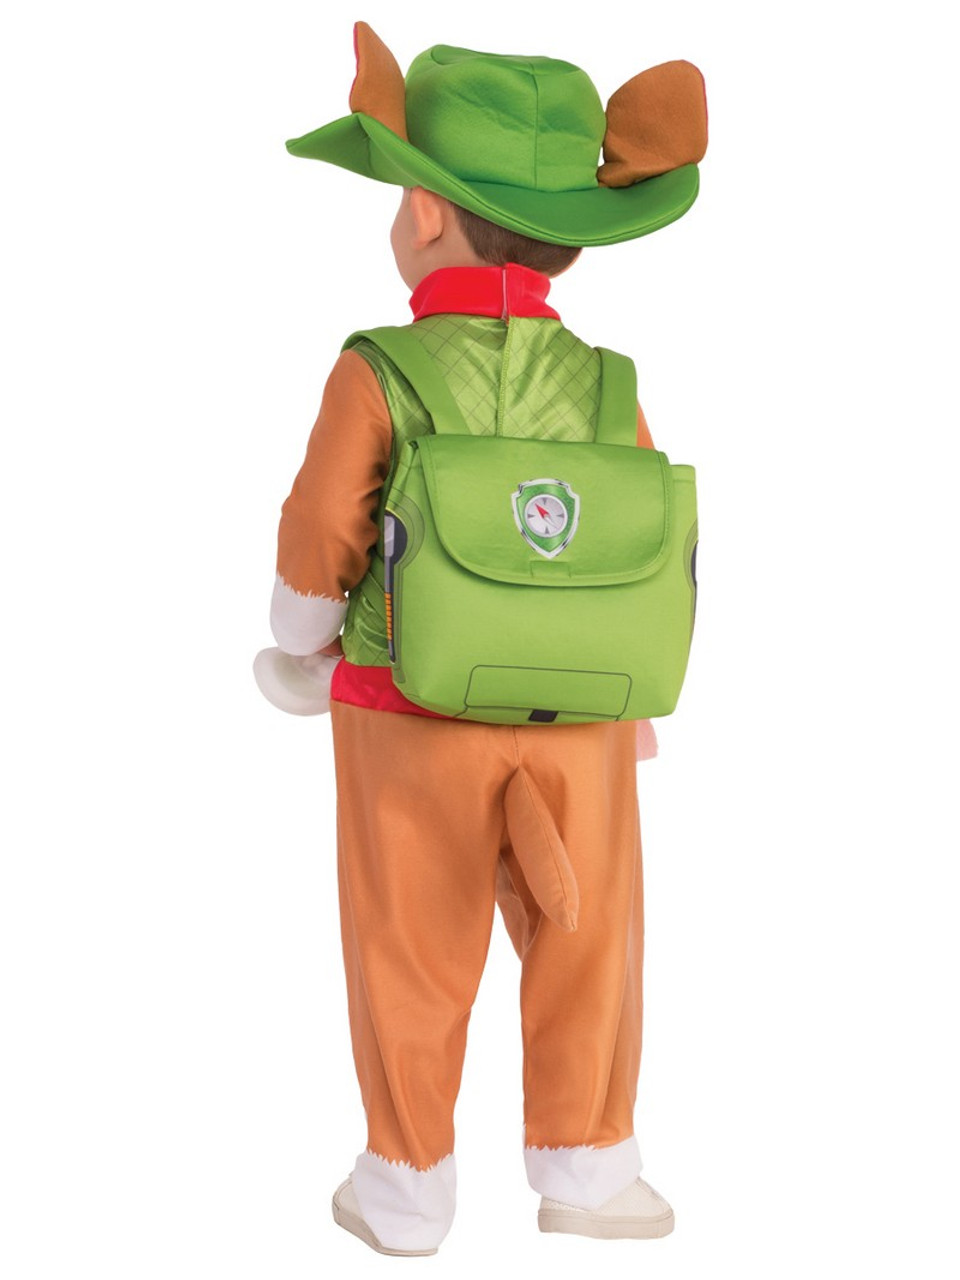 PAW Patrol Tracker Child Costume Inset 2